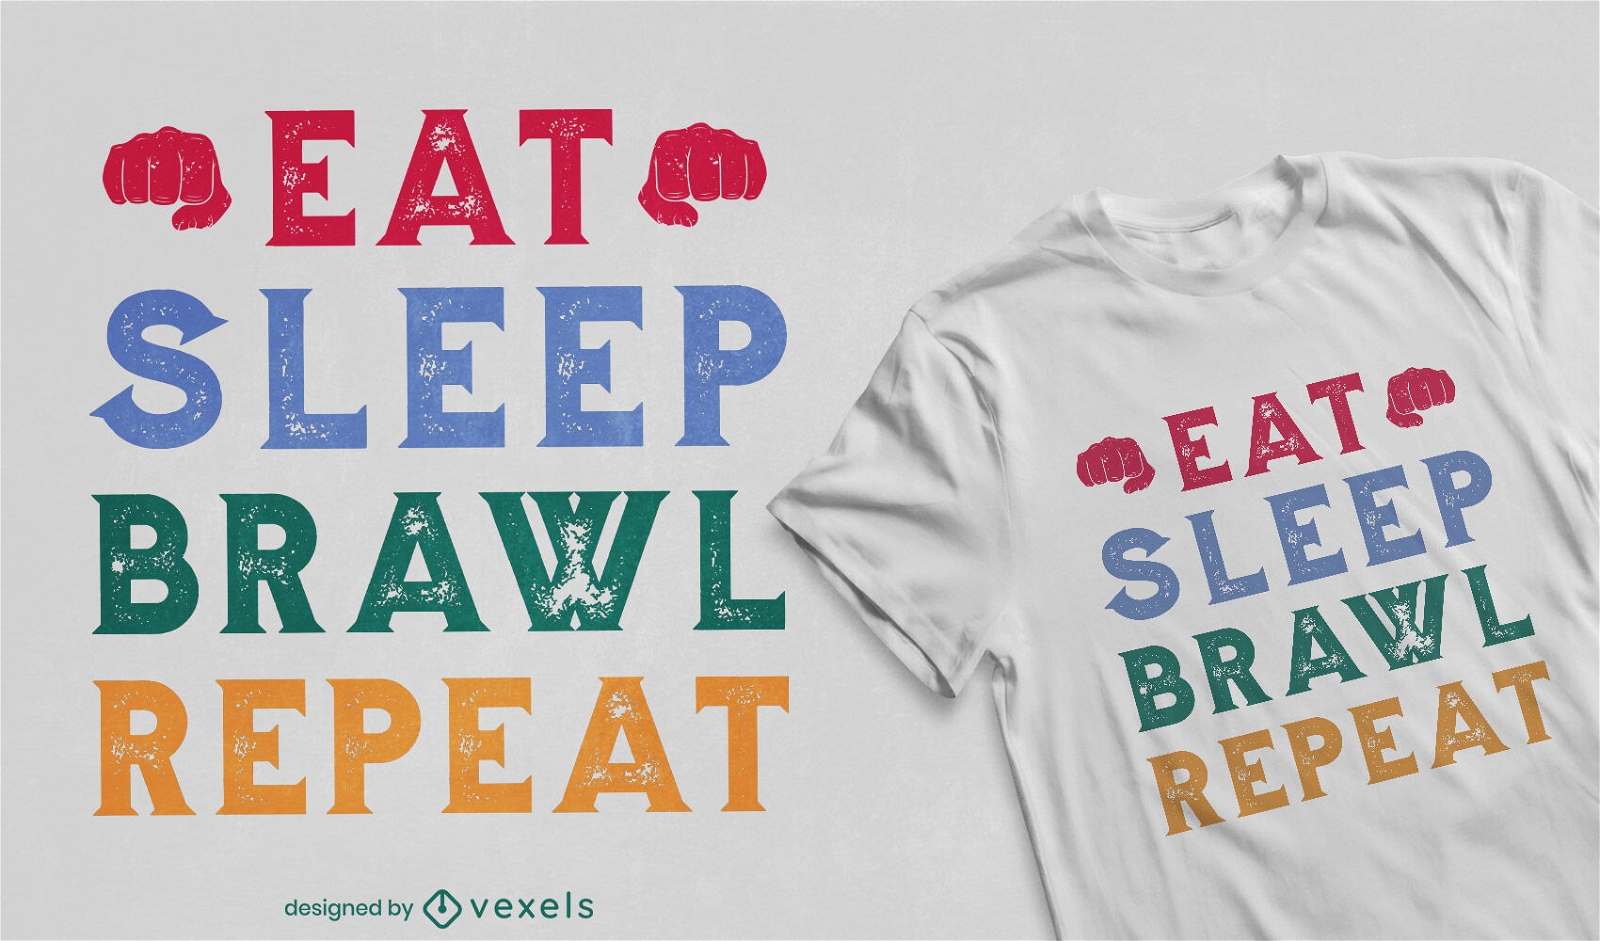 Eat sleep brawl repetir qutoe dise?o de camiseta